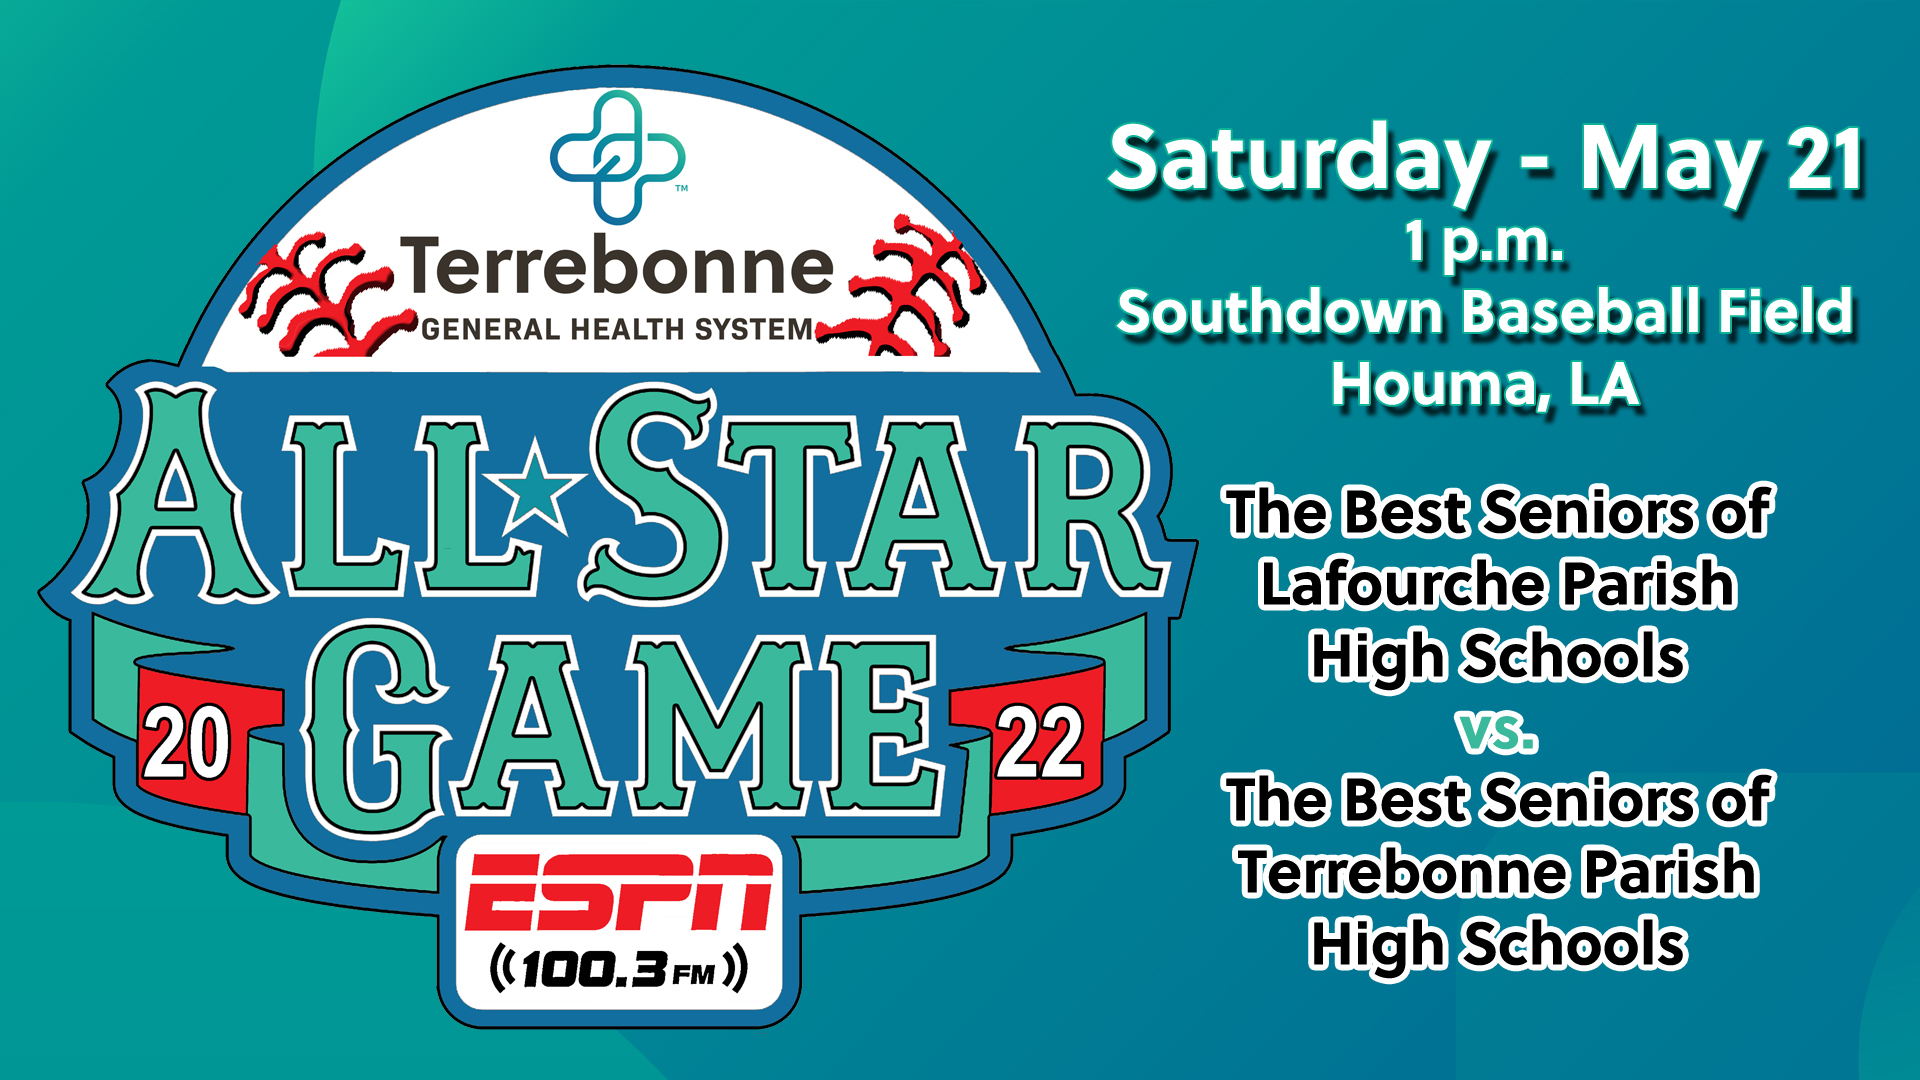 Terrebonne General 14th Annual High School AllStar Baseball Game is